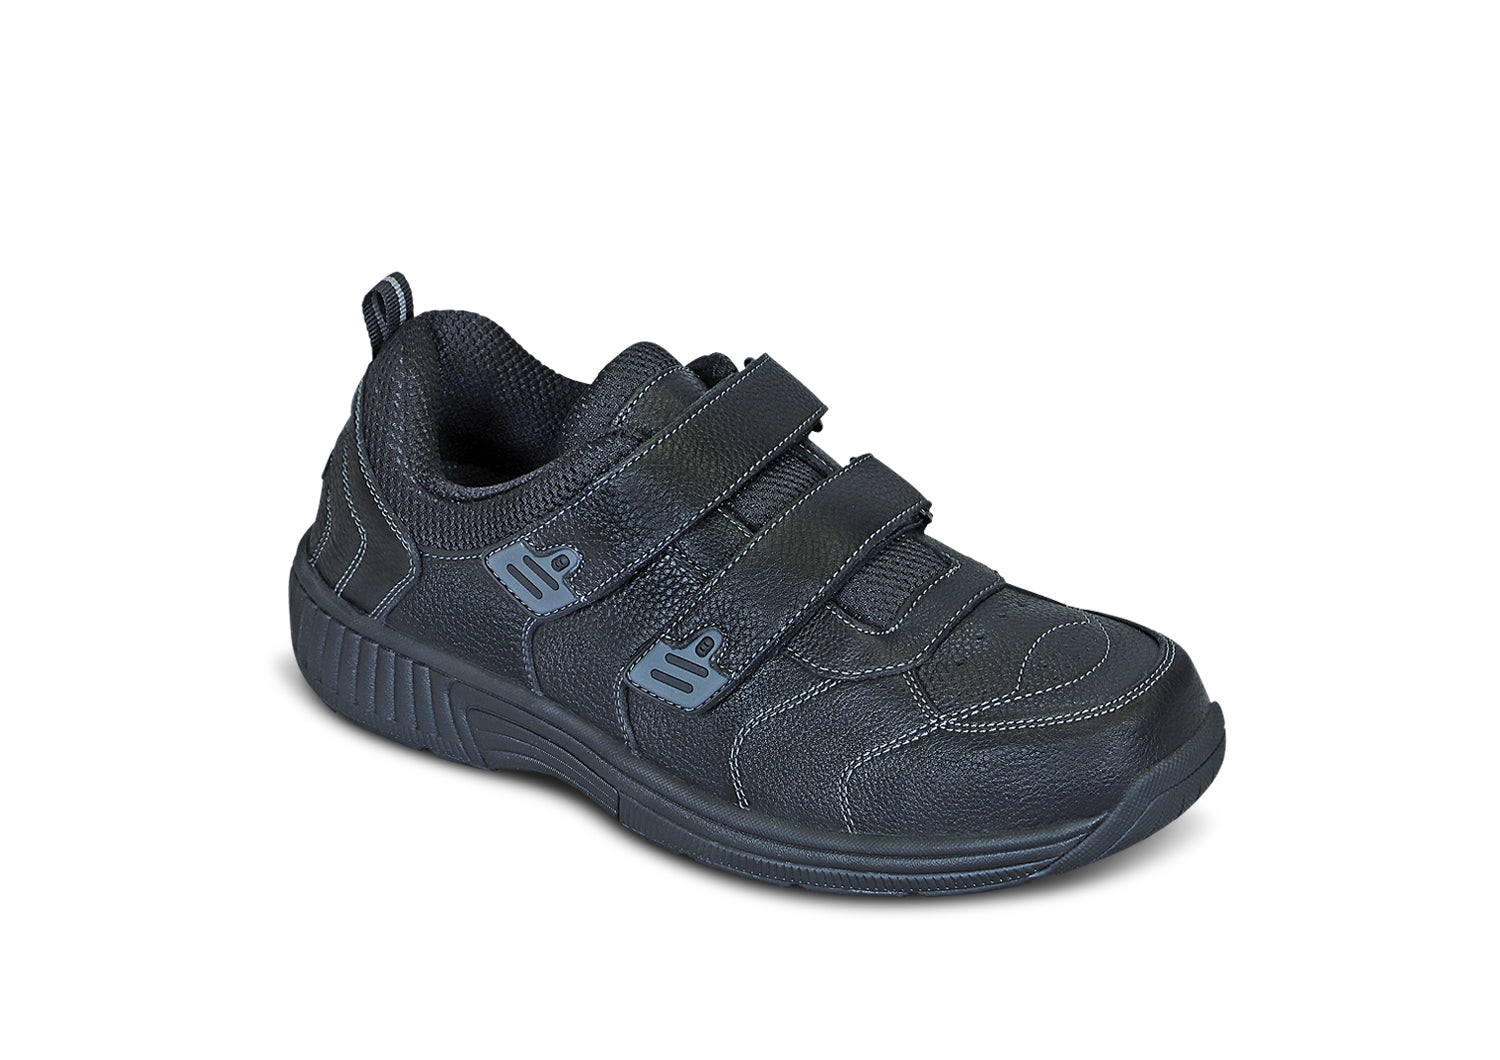 Bata Velcro Shoes - Buy Bata Velcro Shoes online in India